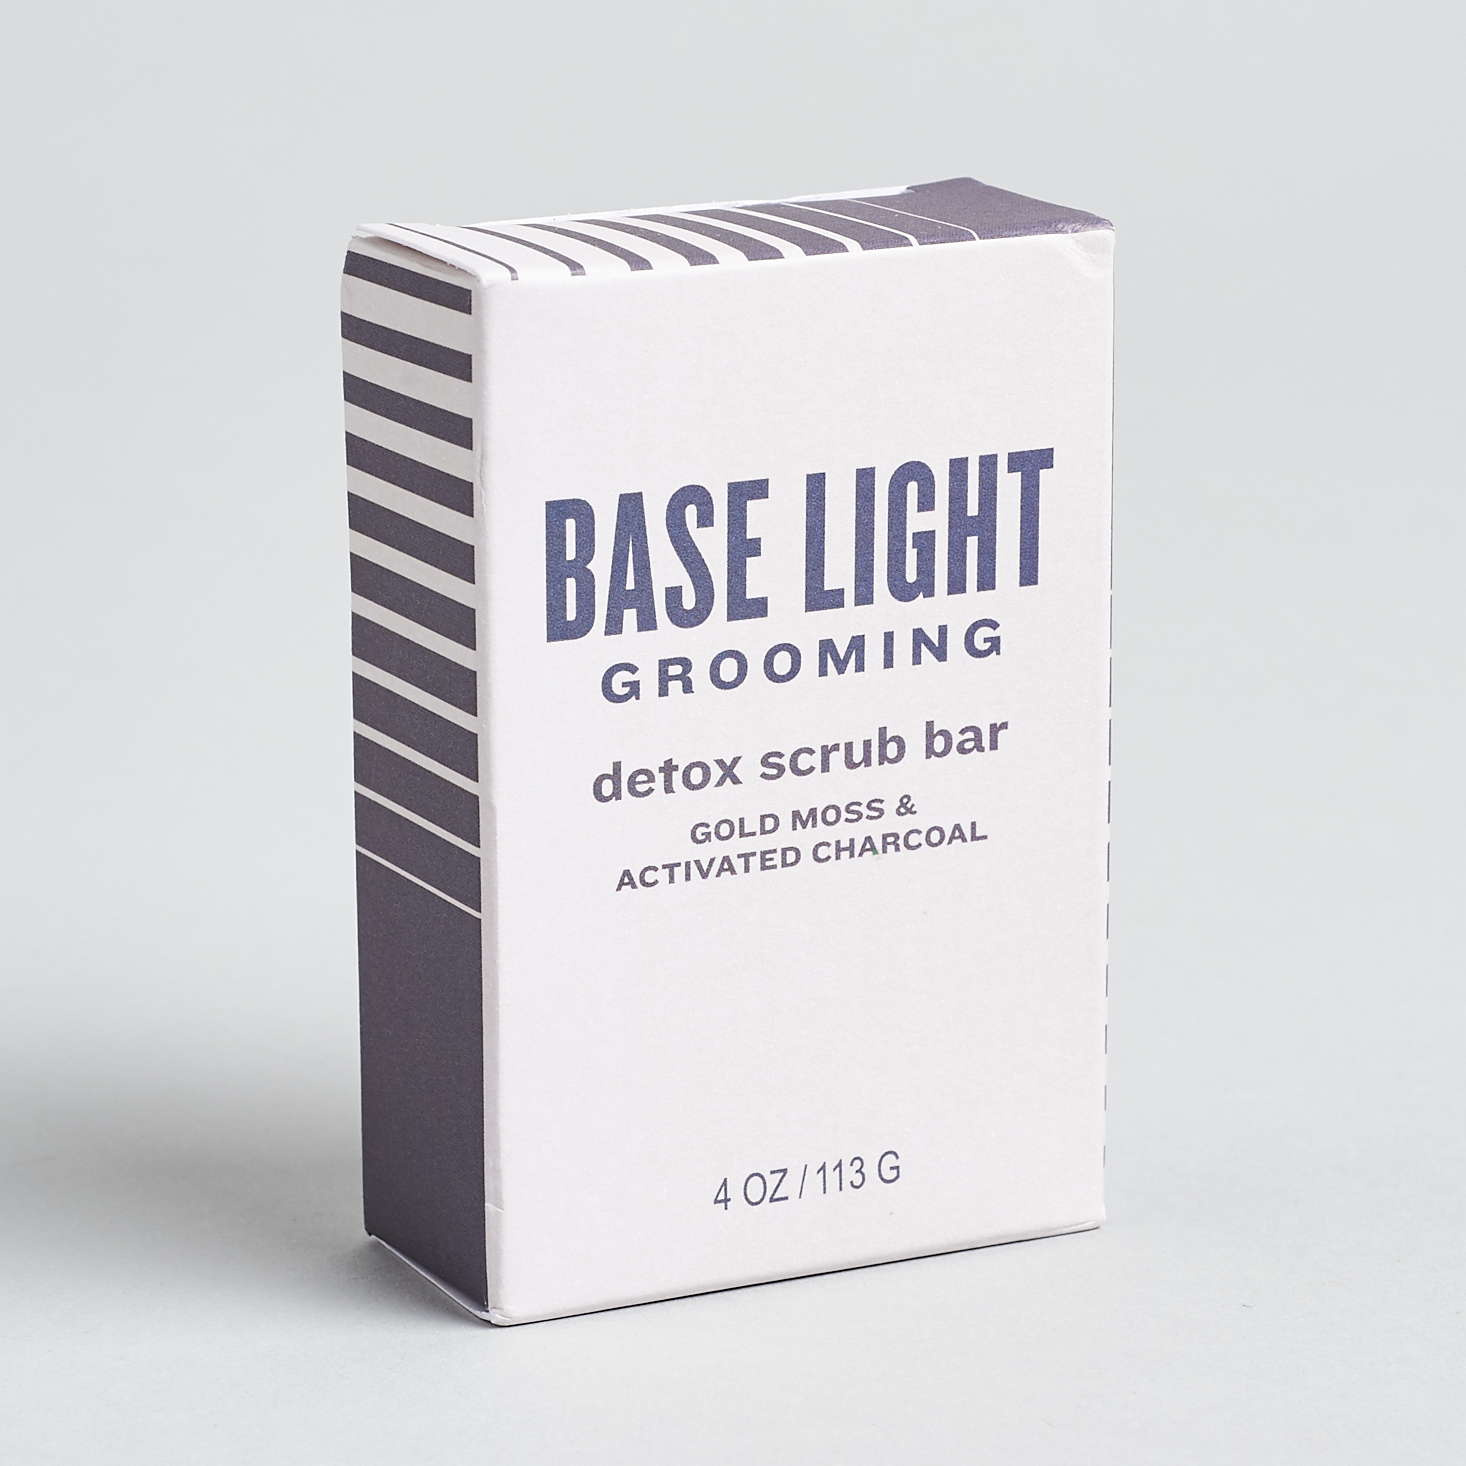 Base Light Grooming Detox Scrub Bar in package